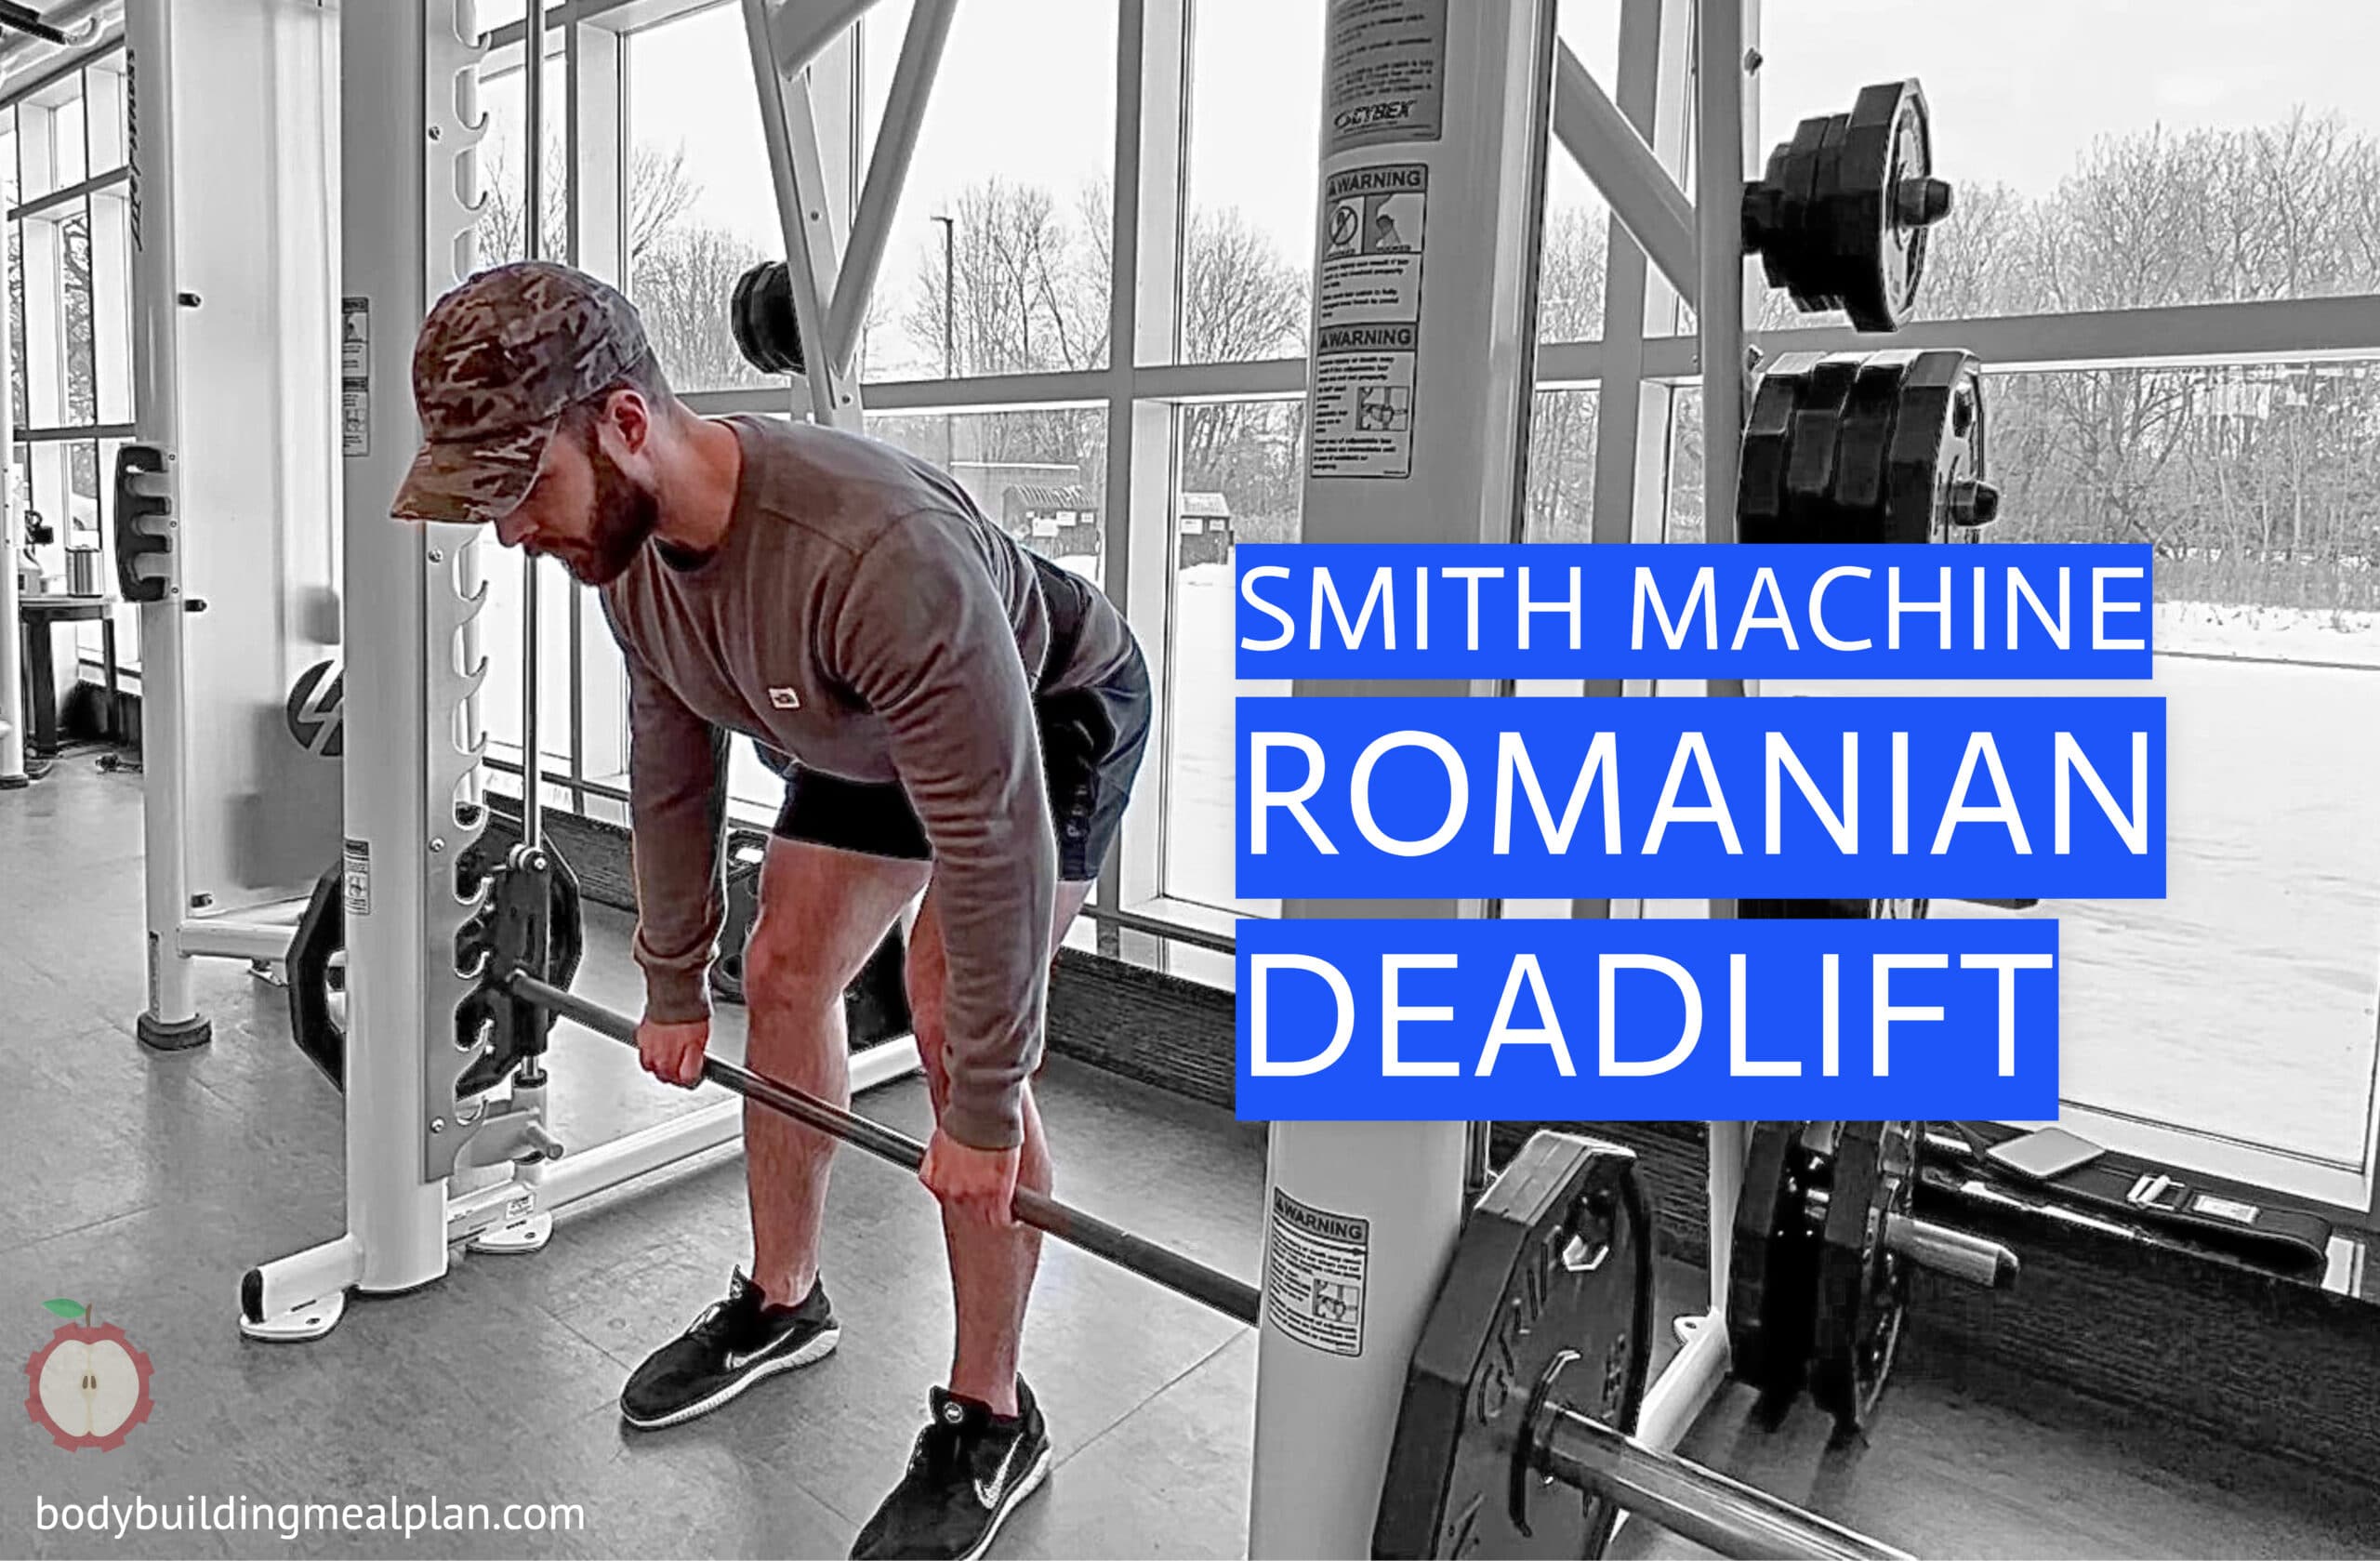 Smith Machine Romanian Deadlift